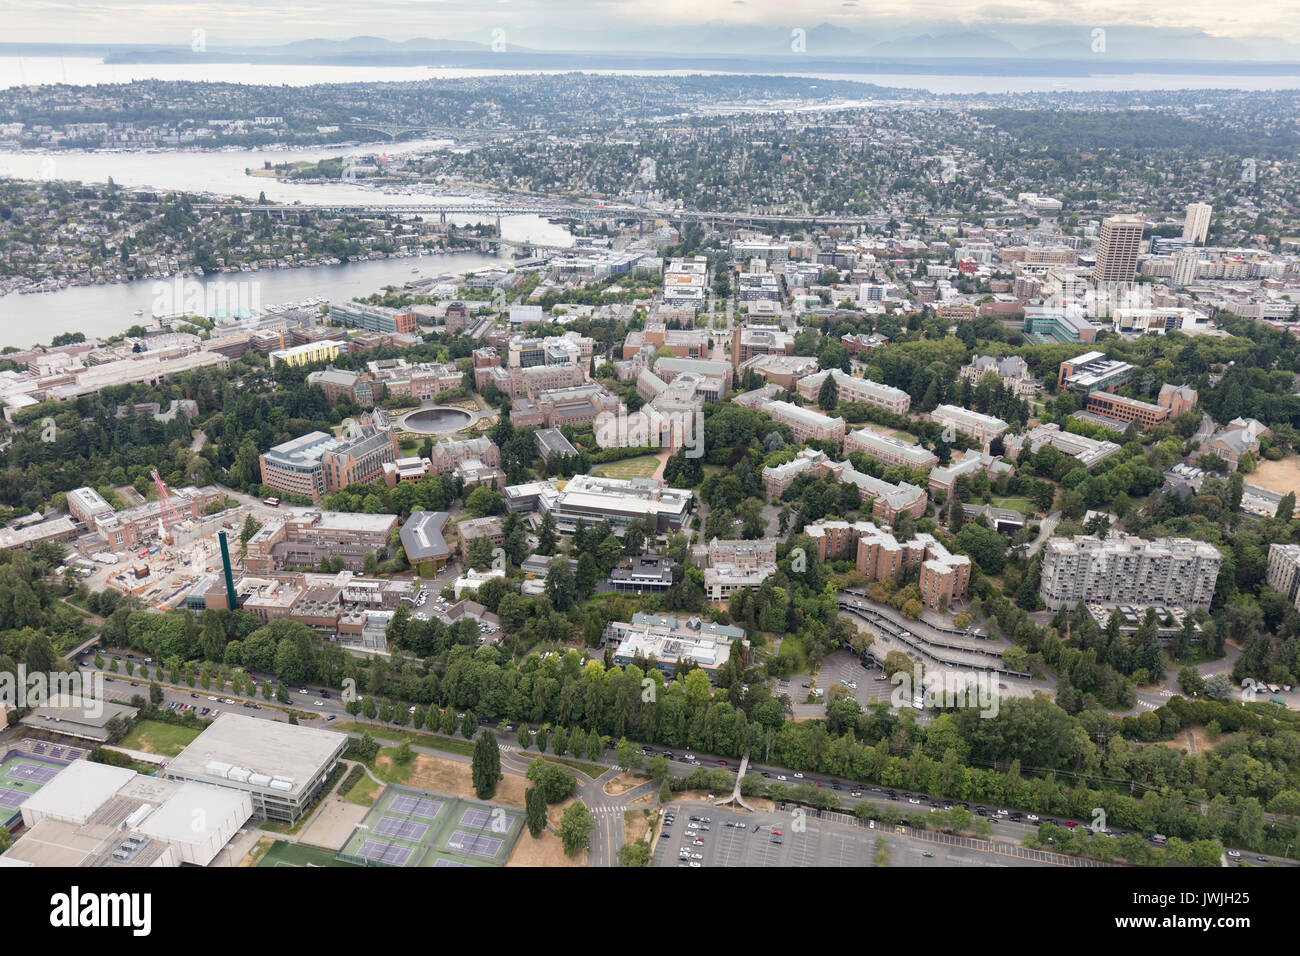 Aerial view of University of Washington, Seattle, Washington State, USA Stock Photo